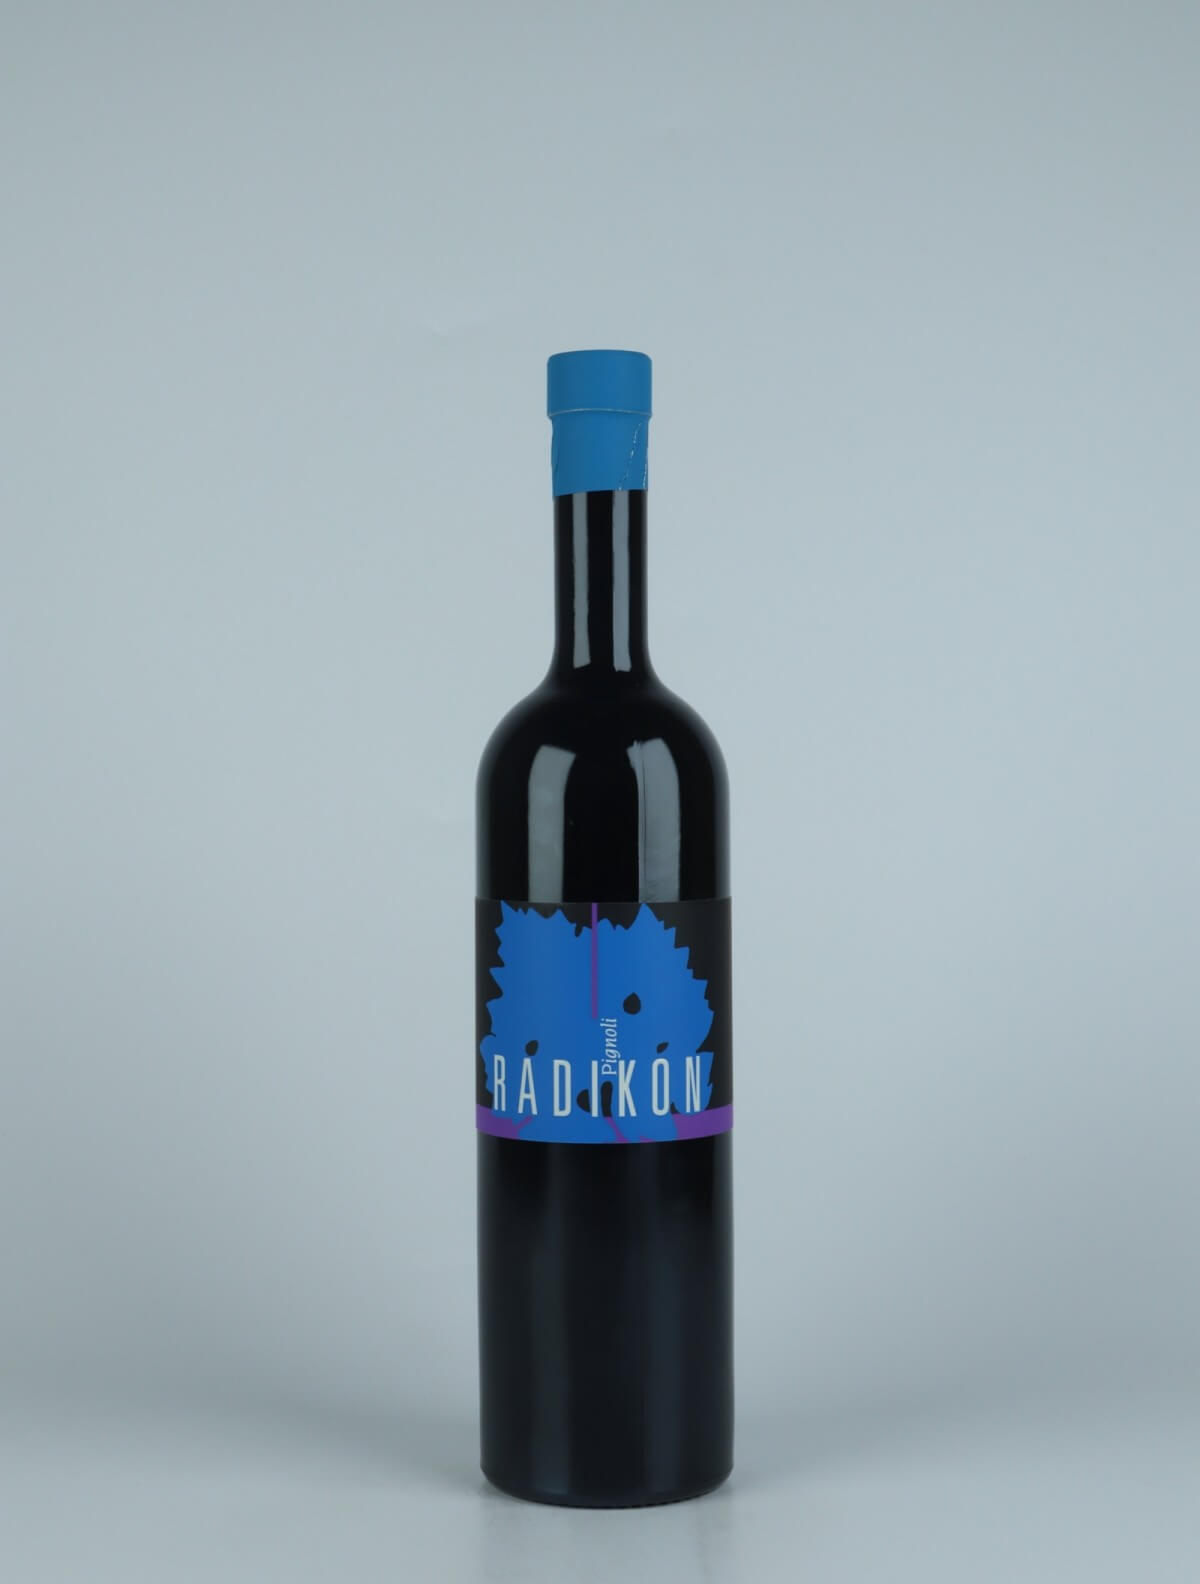 A bottle 2010 Rosso delle Venezie - Pignoli Red wine from Radikon, Friuli in Italy